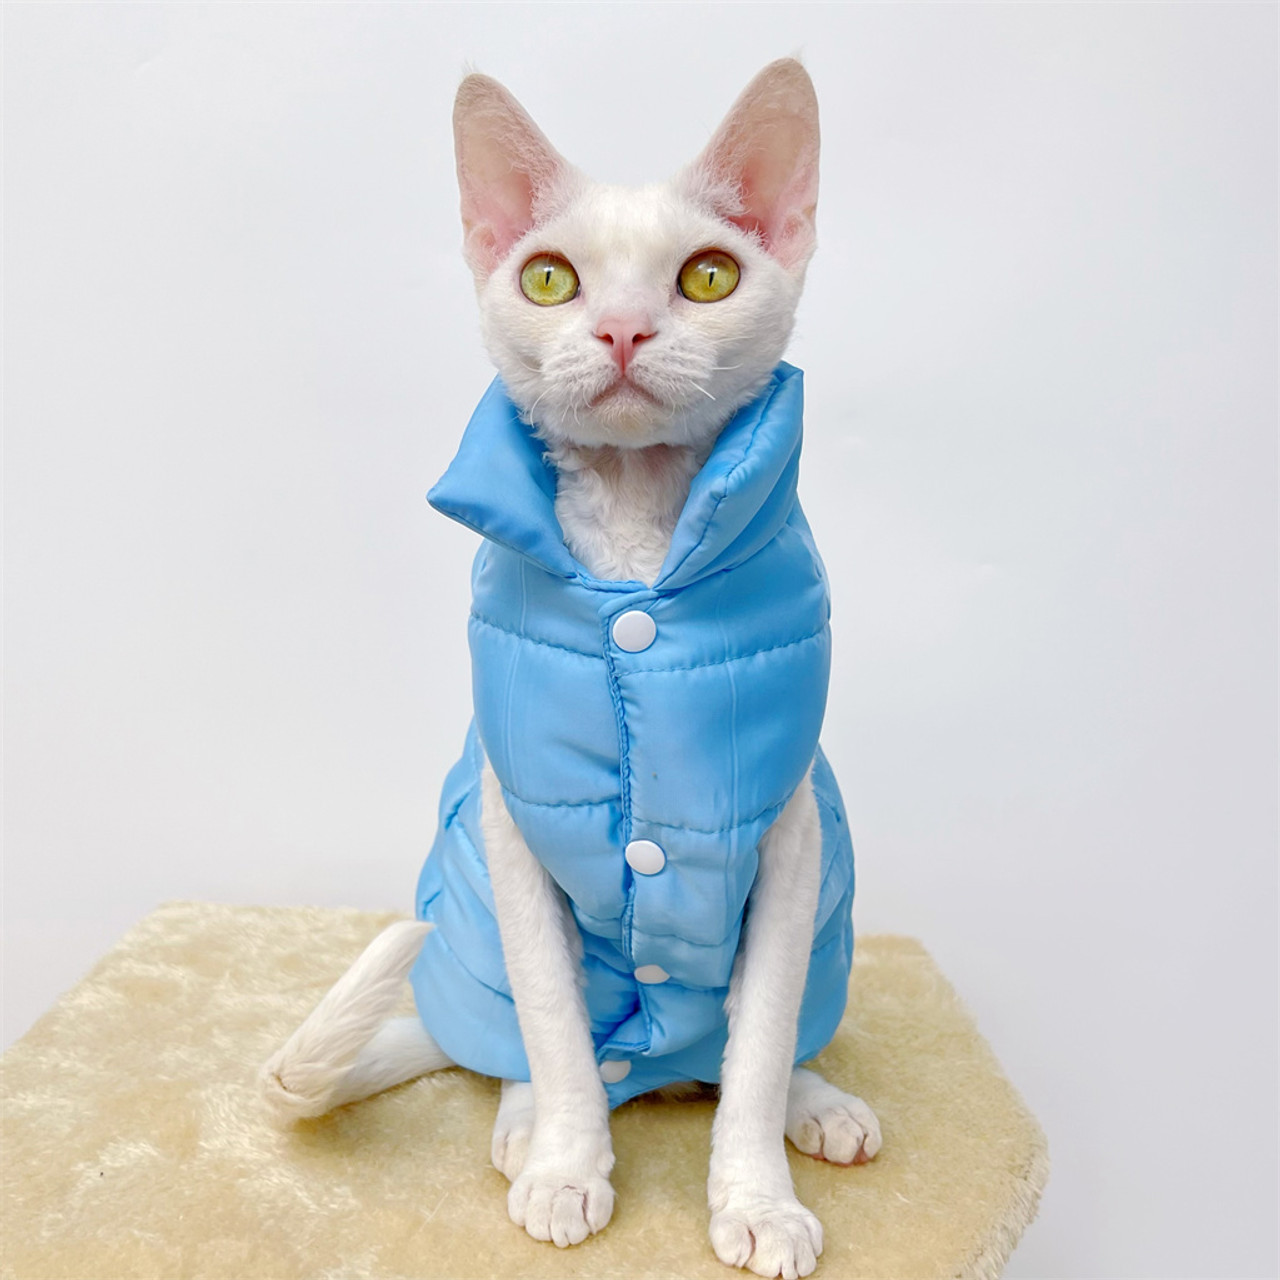 sphynx cat blue clothes DE velvet fabric size S (brand new)